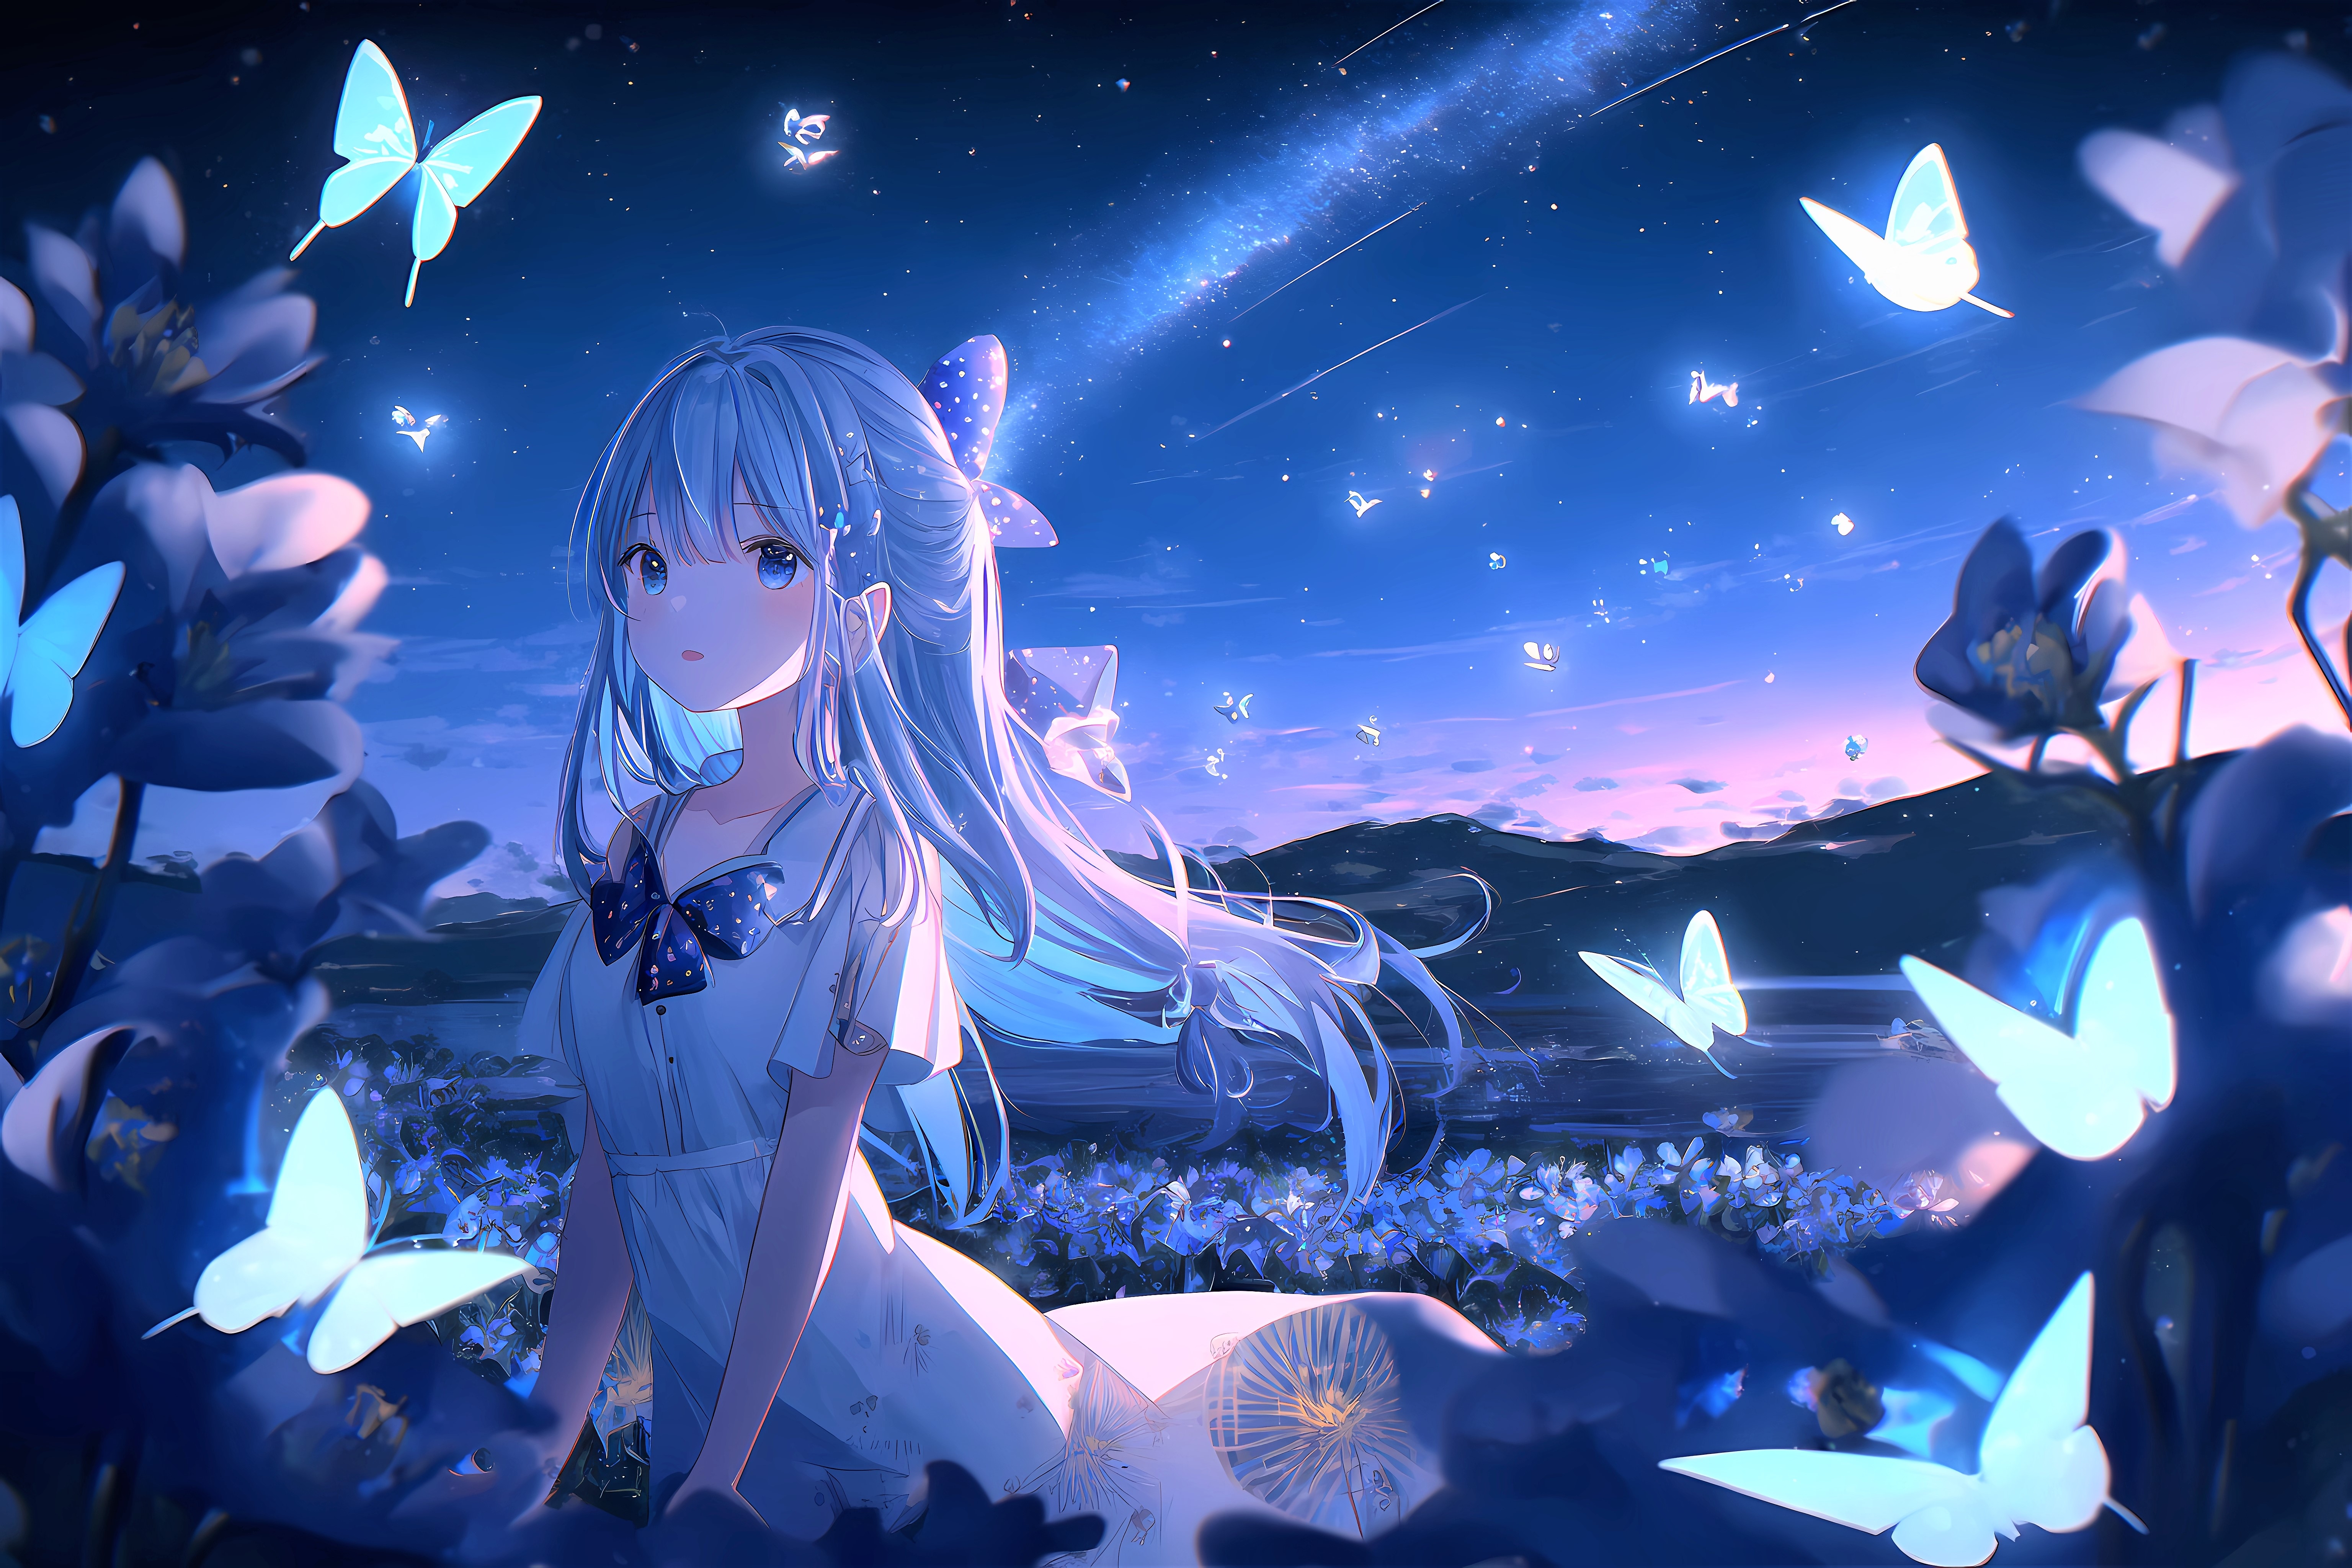 HD wallpaper, Anime Girl, Lonely, Surreal, Butterflies, Dream, 5K, Beautiful